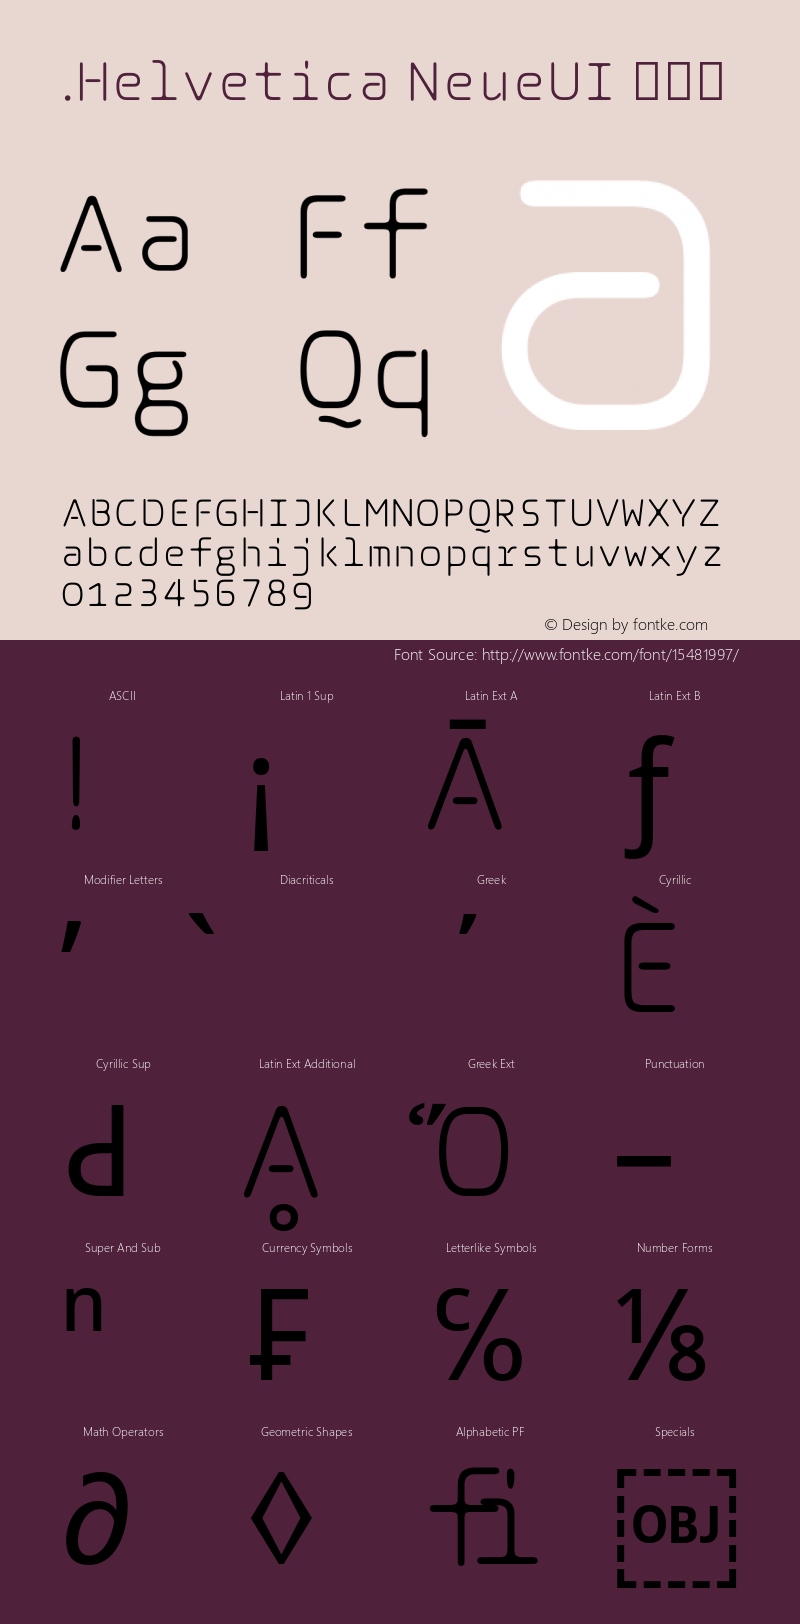 .Helvetica NeueUI 常规体 10.0d35e1 Font Sample